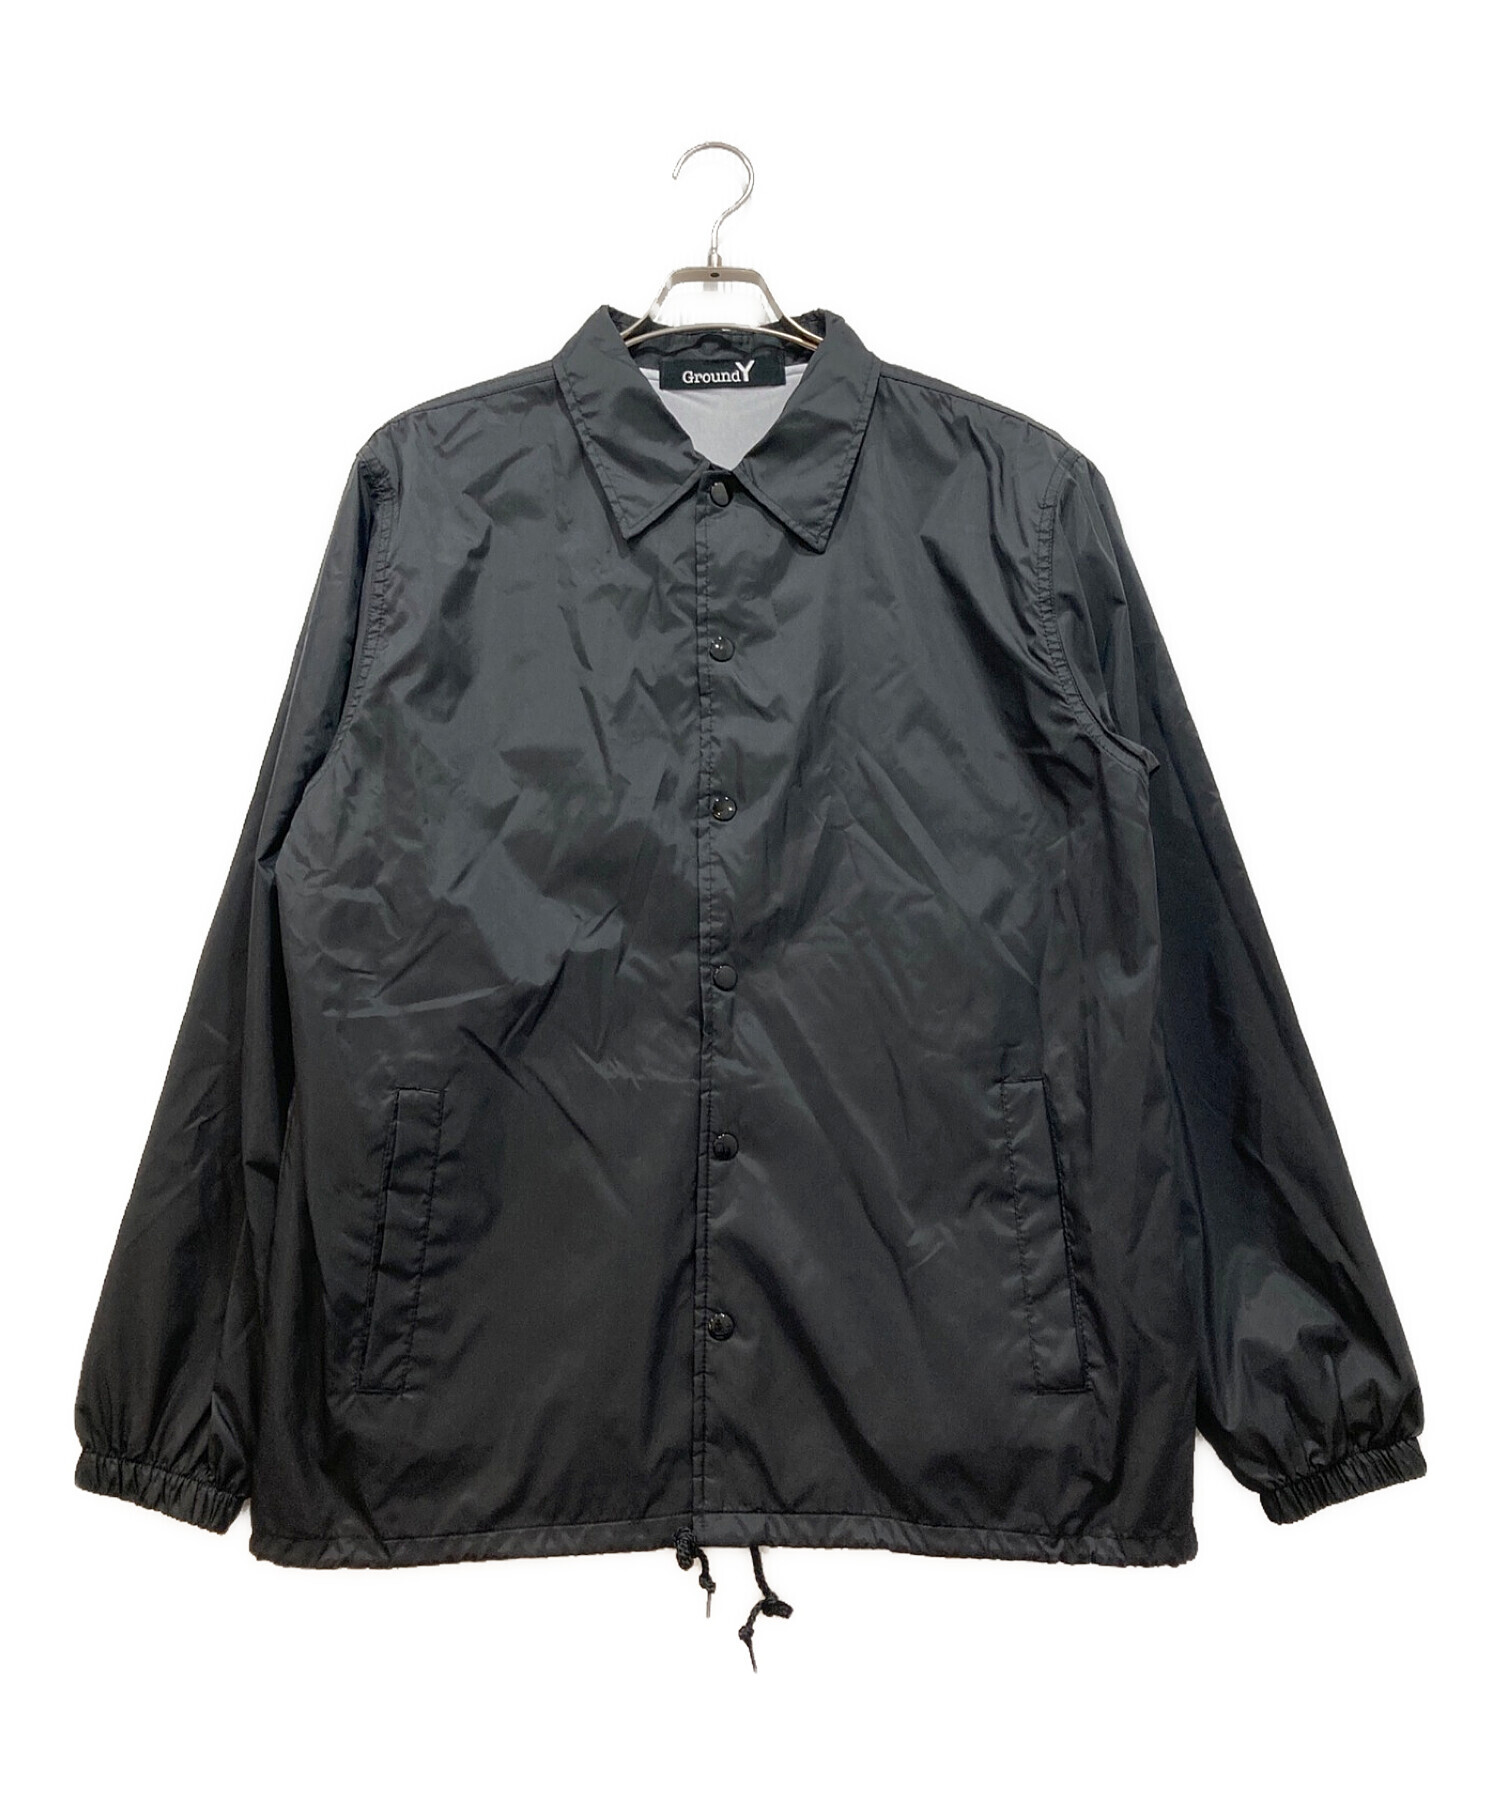 GROUND Y (グラウンドワイ) Logo print coach jacket ブラック サイズ:3